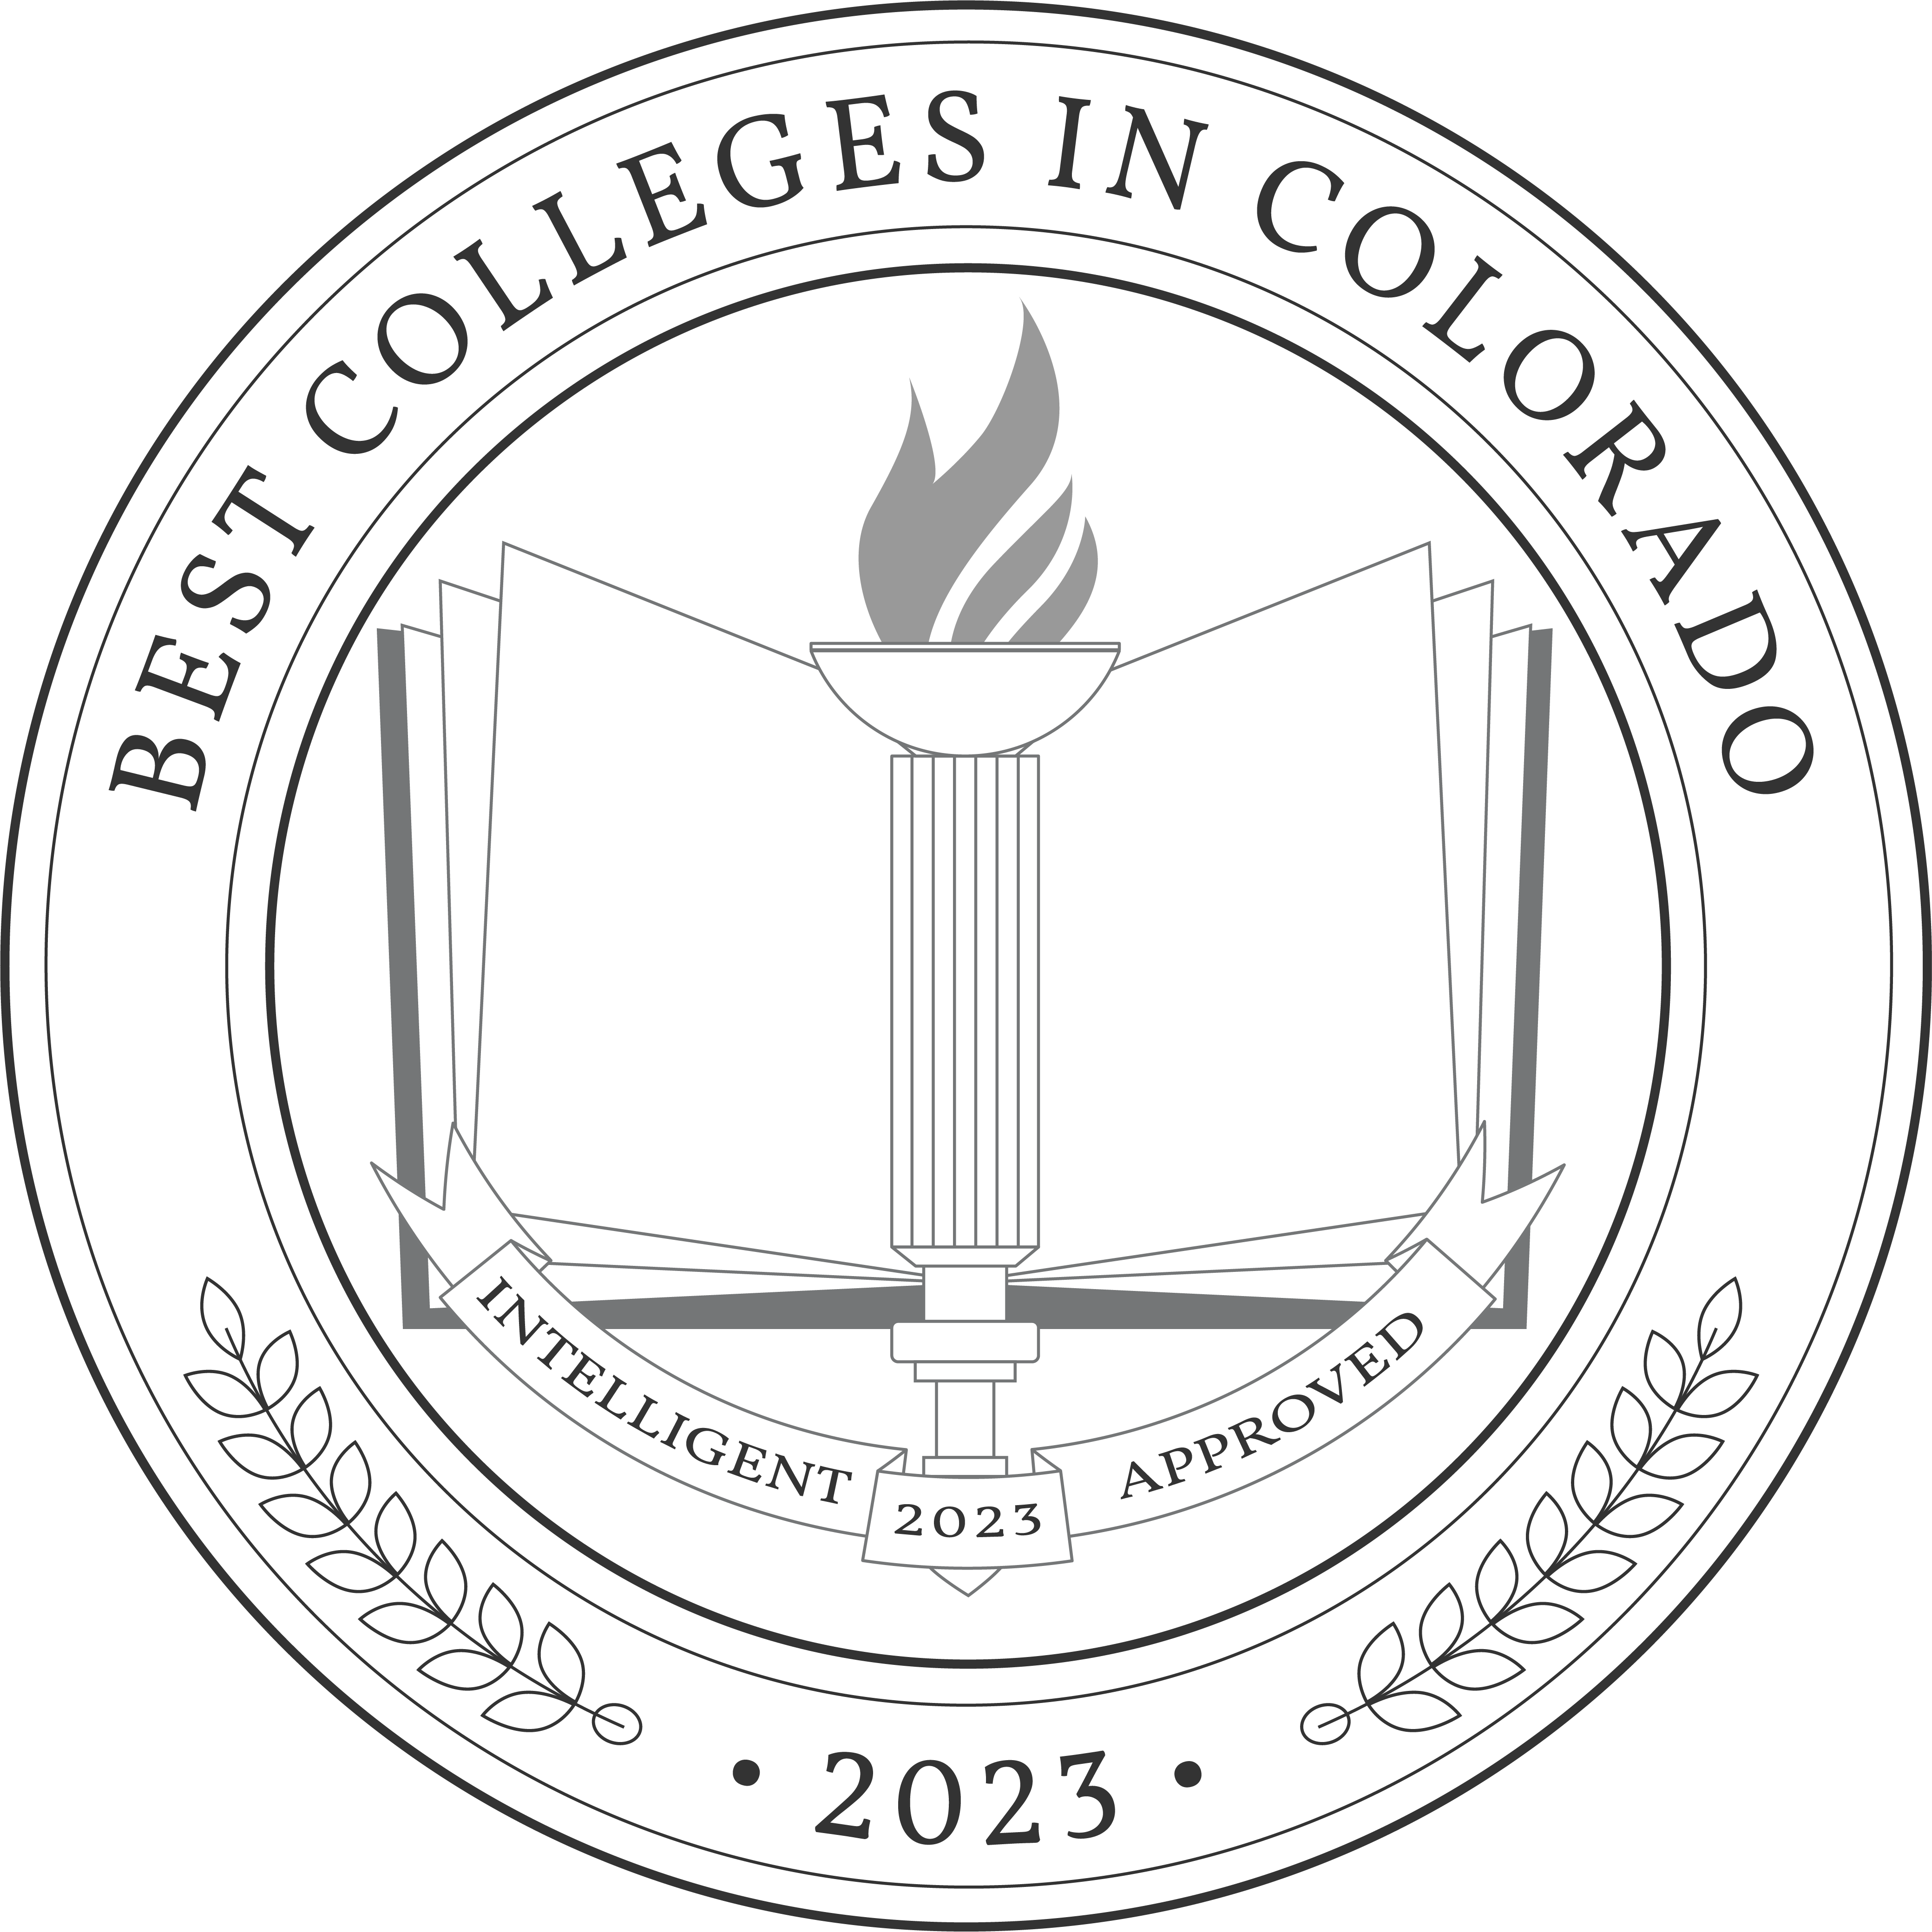 Best Colleges in Colorado 2023 Badge